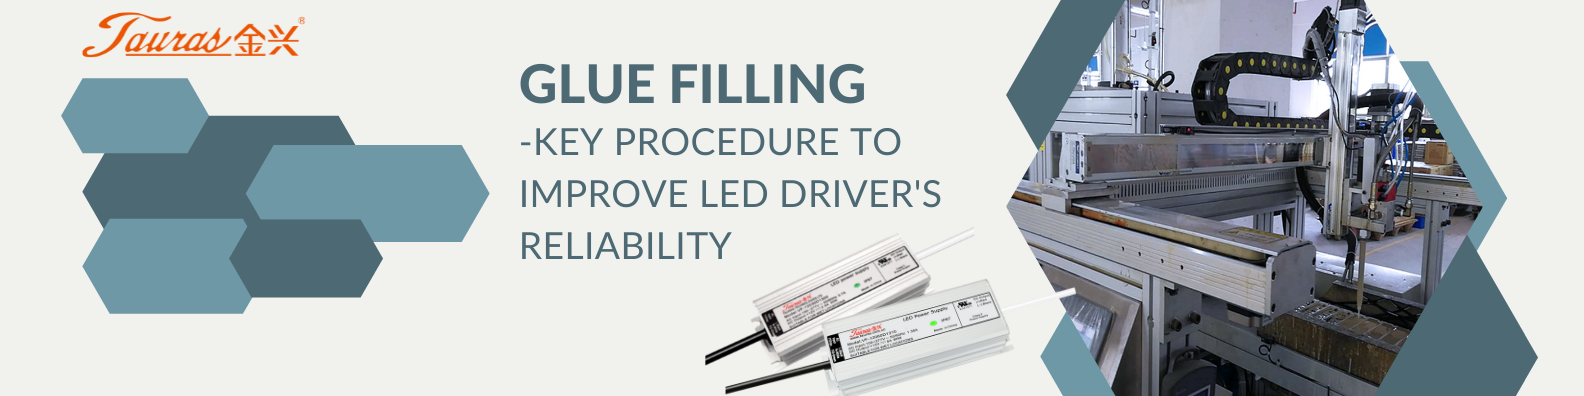 GLUE FILLING Key procedure to improve led driver's reliability1